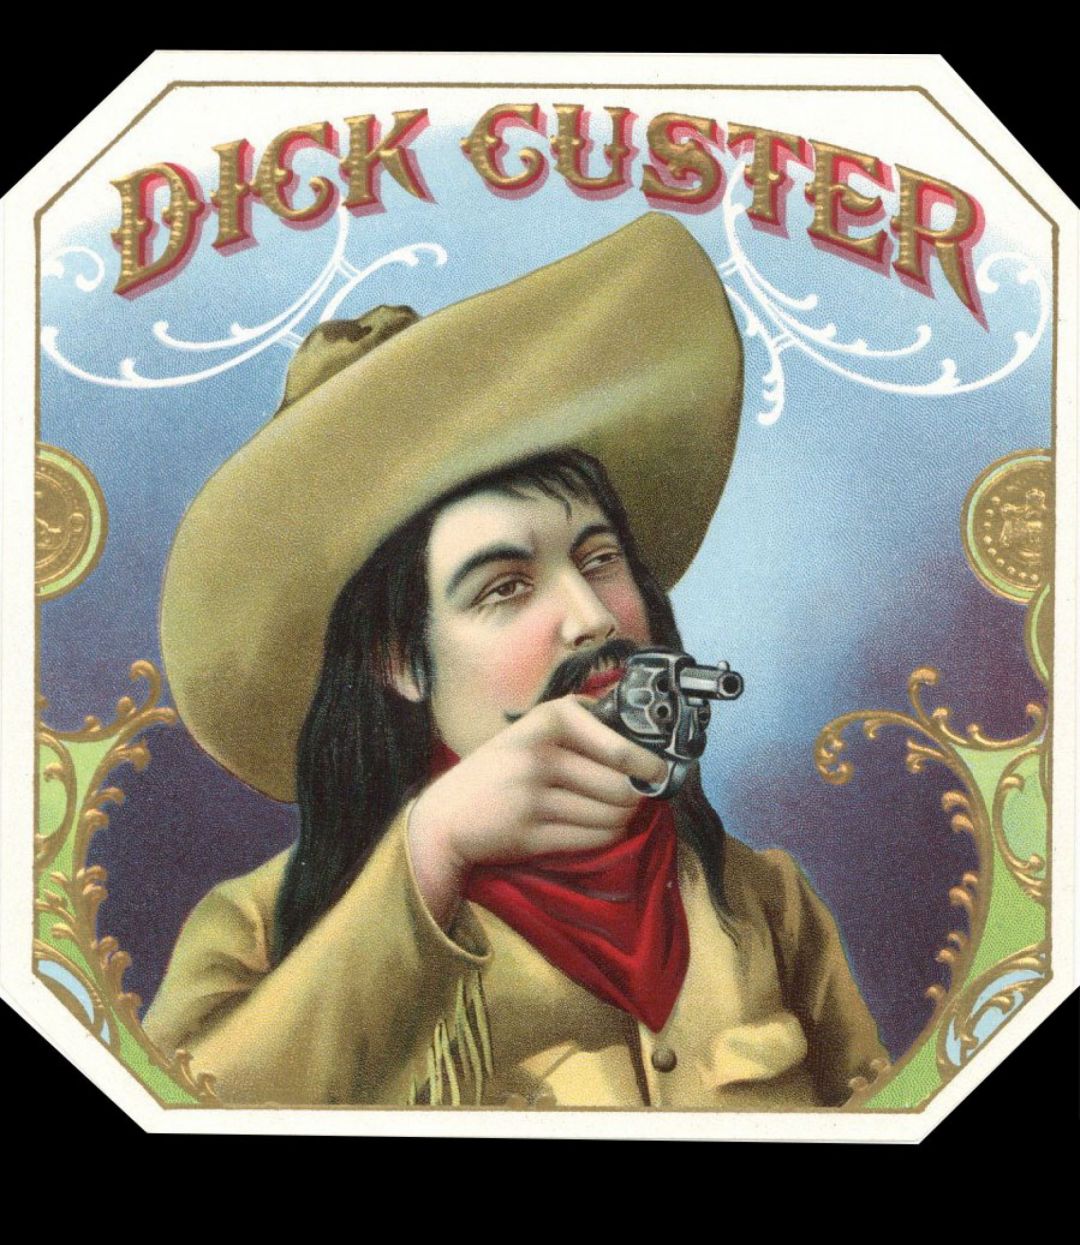 Dick Custer - Cigar Box Label - <b>Not Actual Cigars</b>